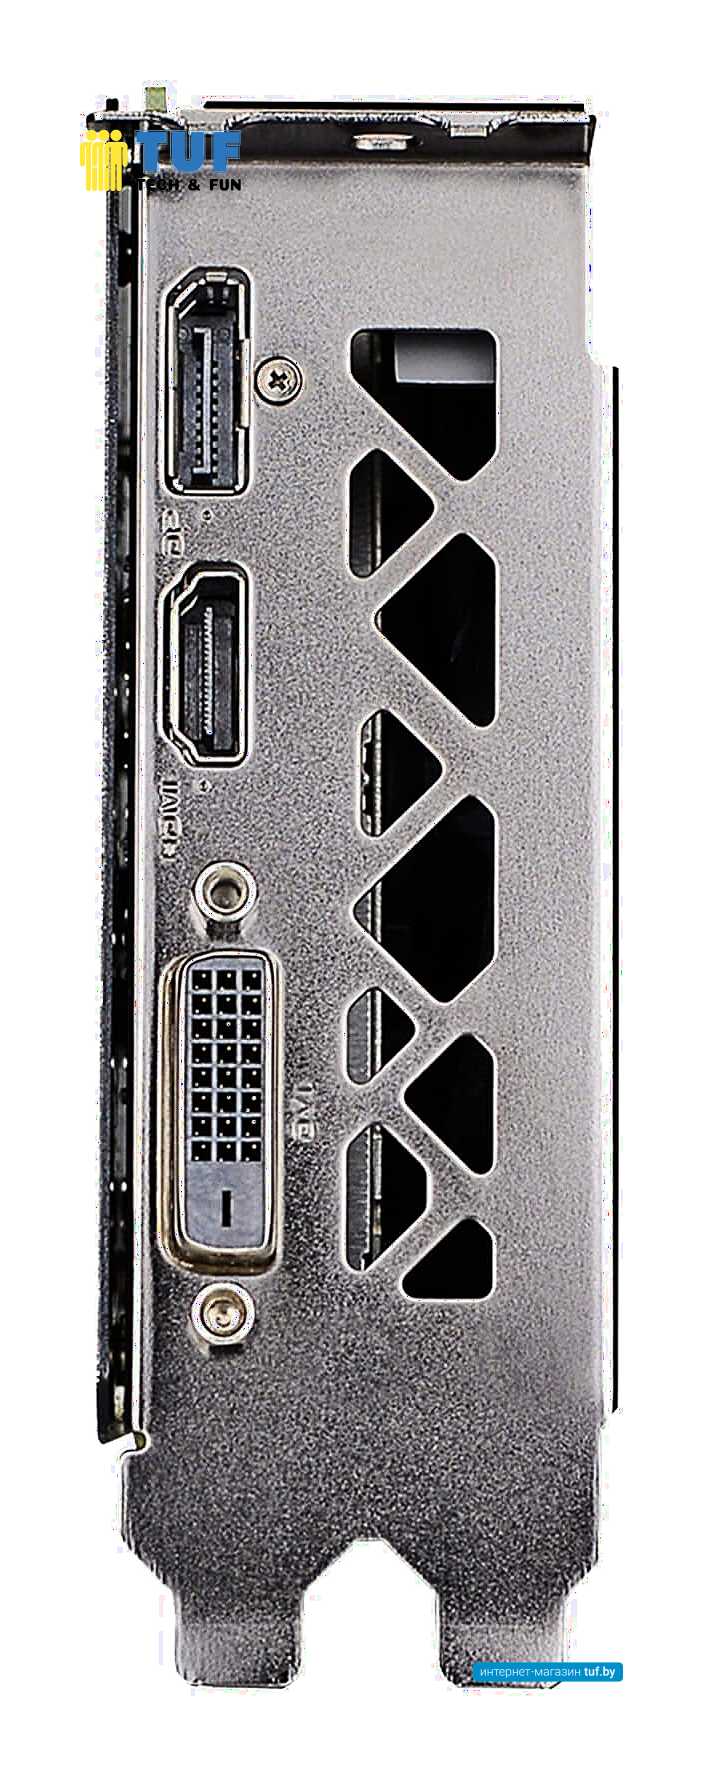 Видеокарта EVGA GeForce RTX 2060 KO Ultra Gaming 6GB GDDR6 06G-P4-2068-KR